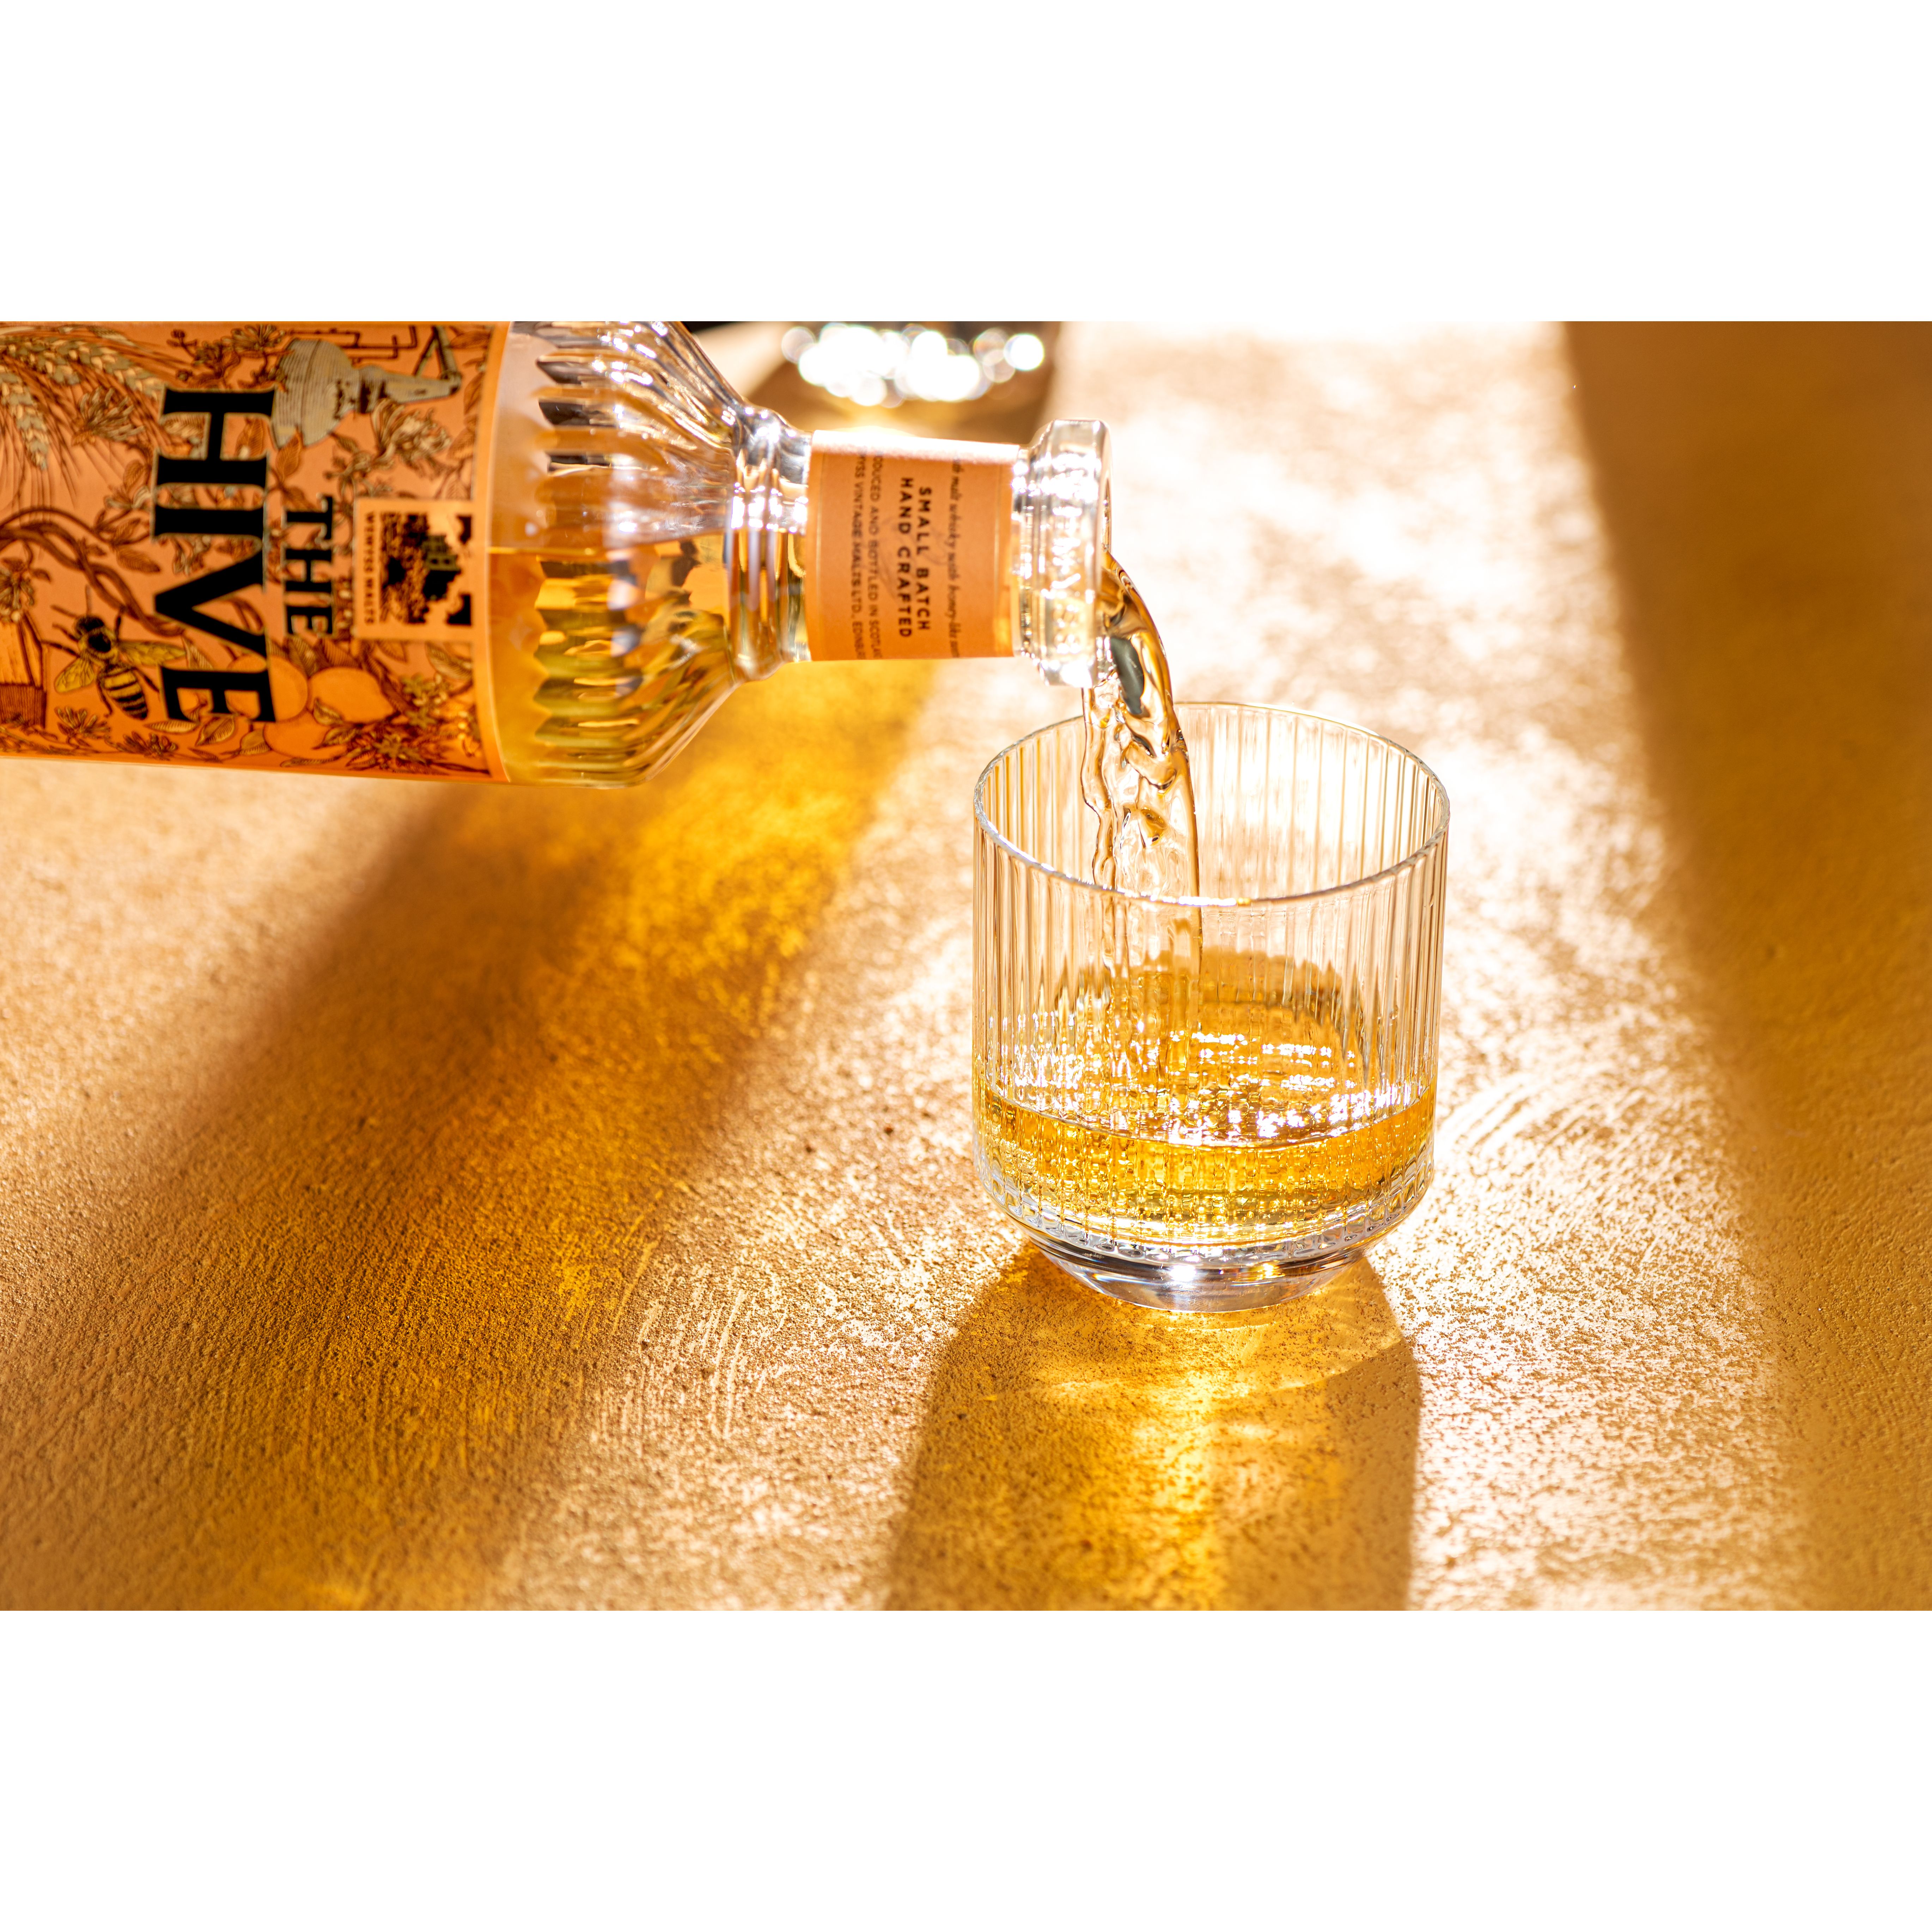 Виски Wemyss Malts The Hive Blended Malt 46% 0.7 л в подарочной упаковке - фото 4